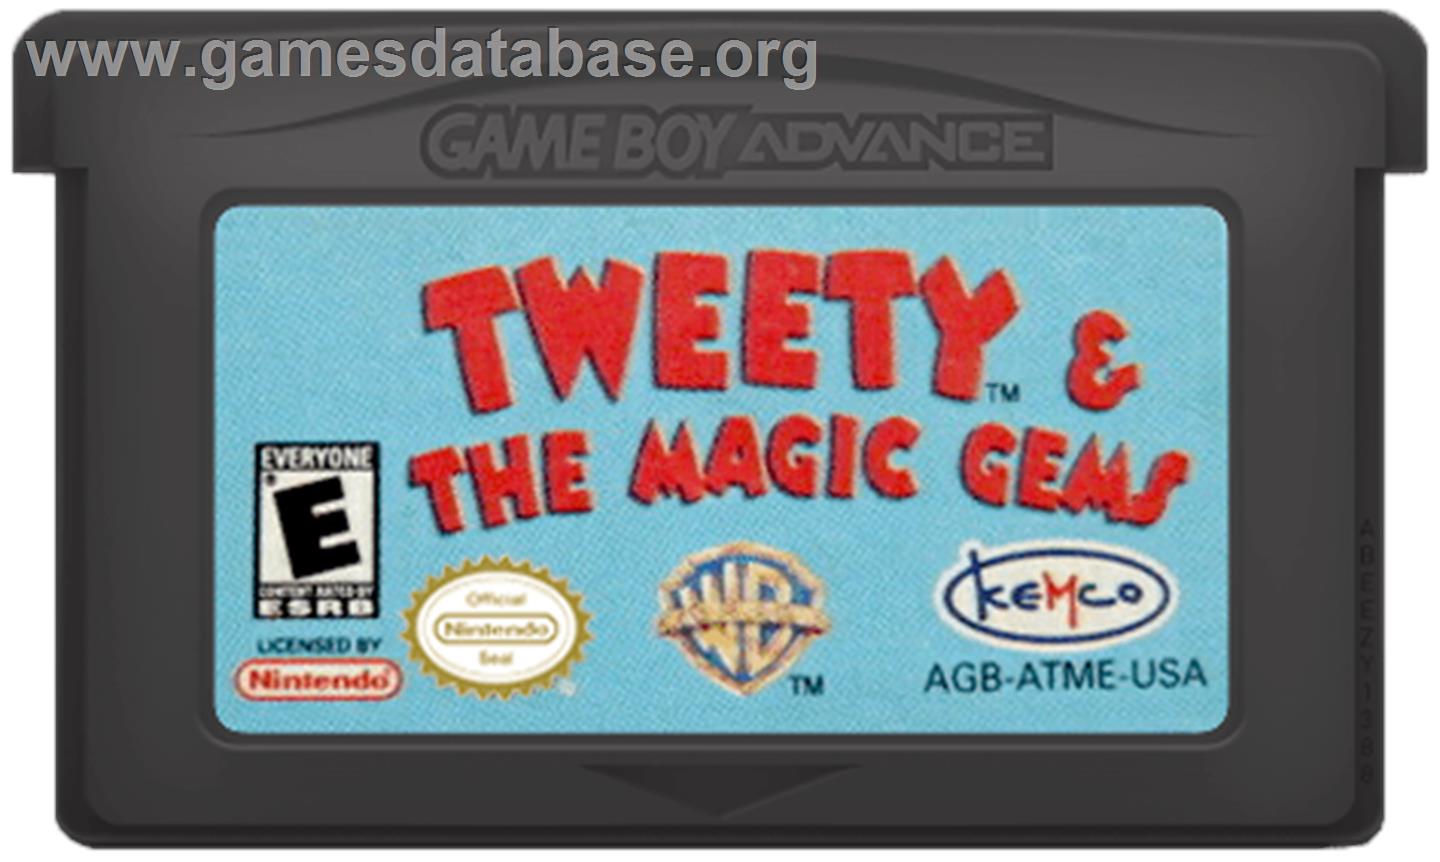 Tweety and the Magic Gems - Nintendo Game Boy Advance - Artwork - Cartridge